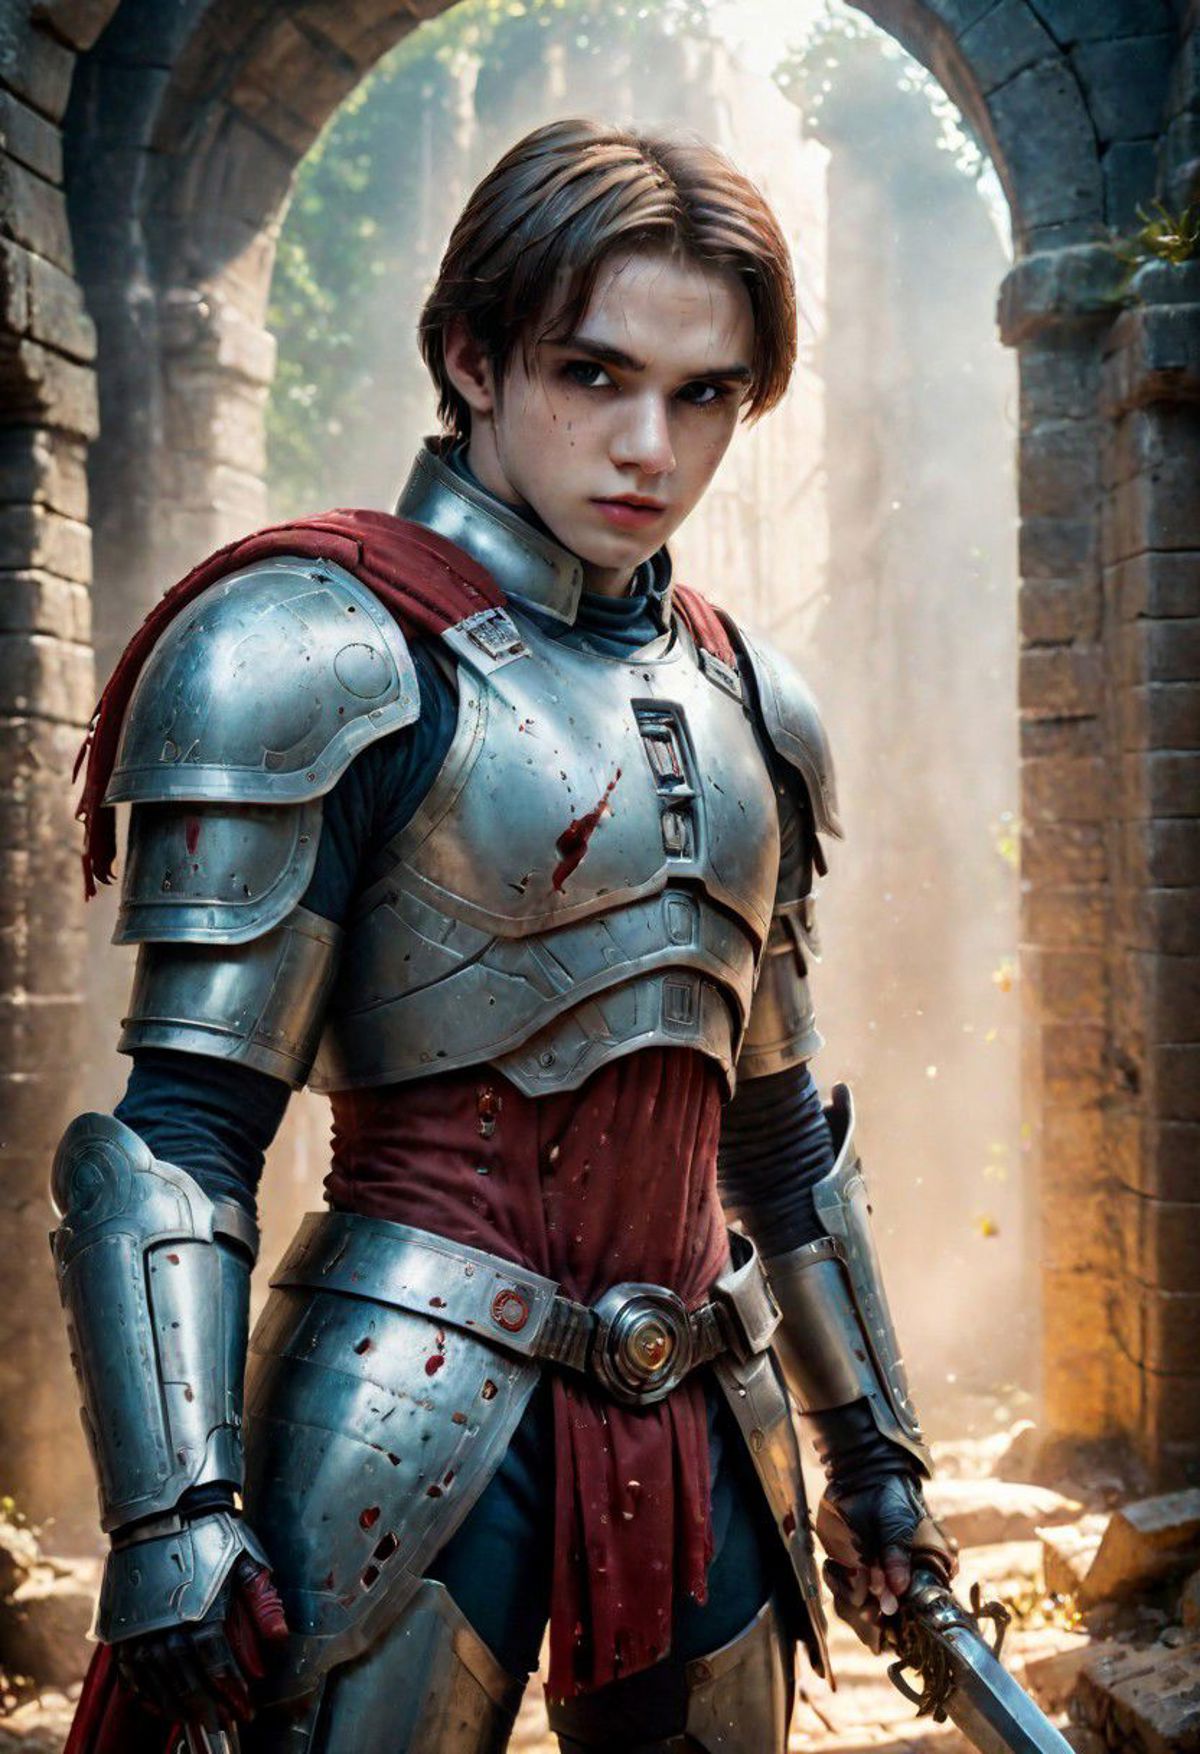 Model armor medieval futuristic man image by Cyberpunkk